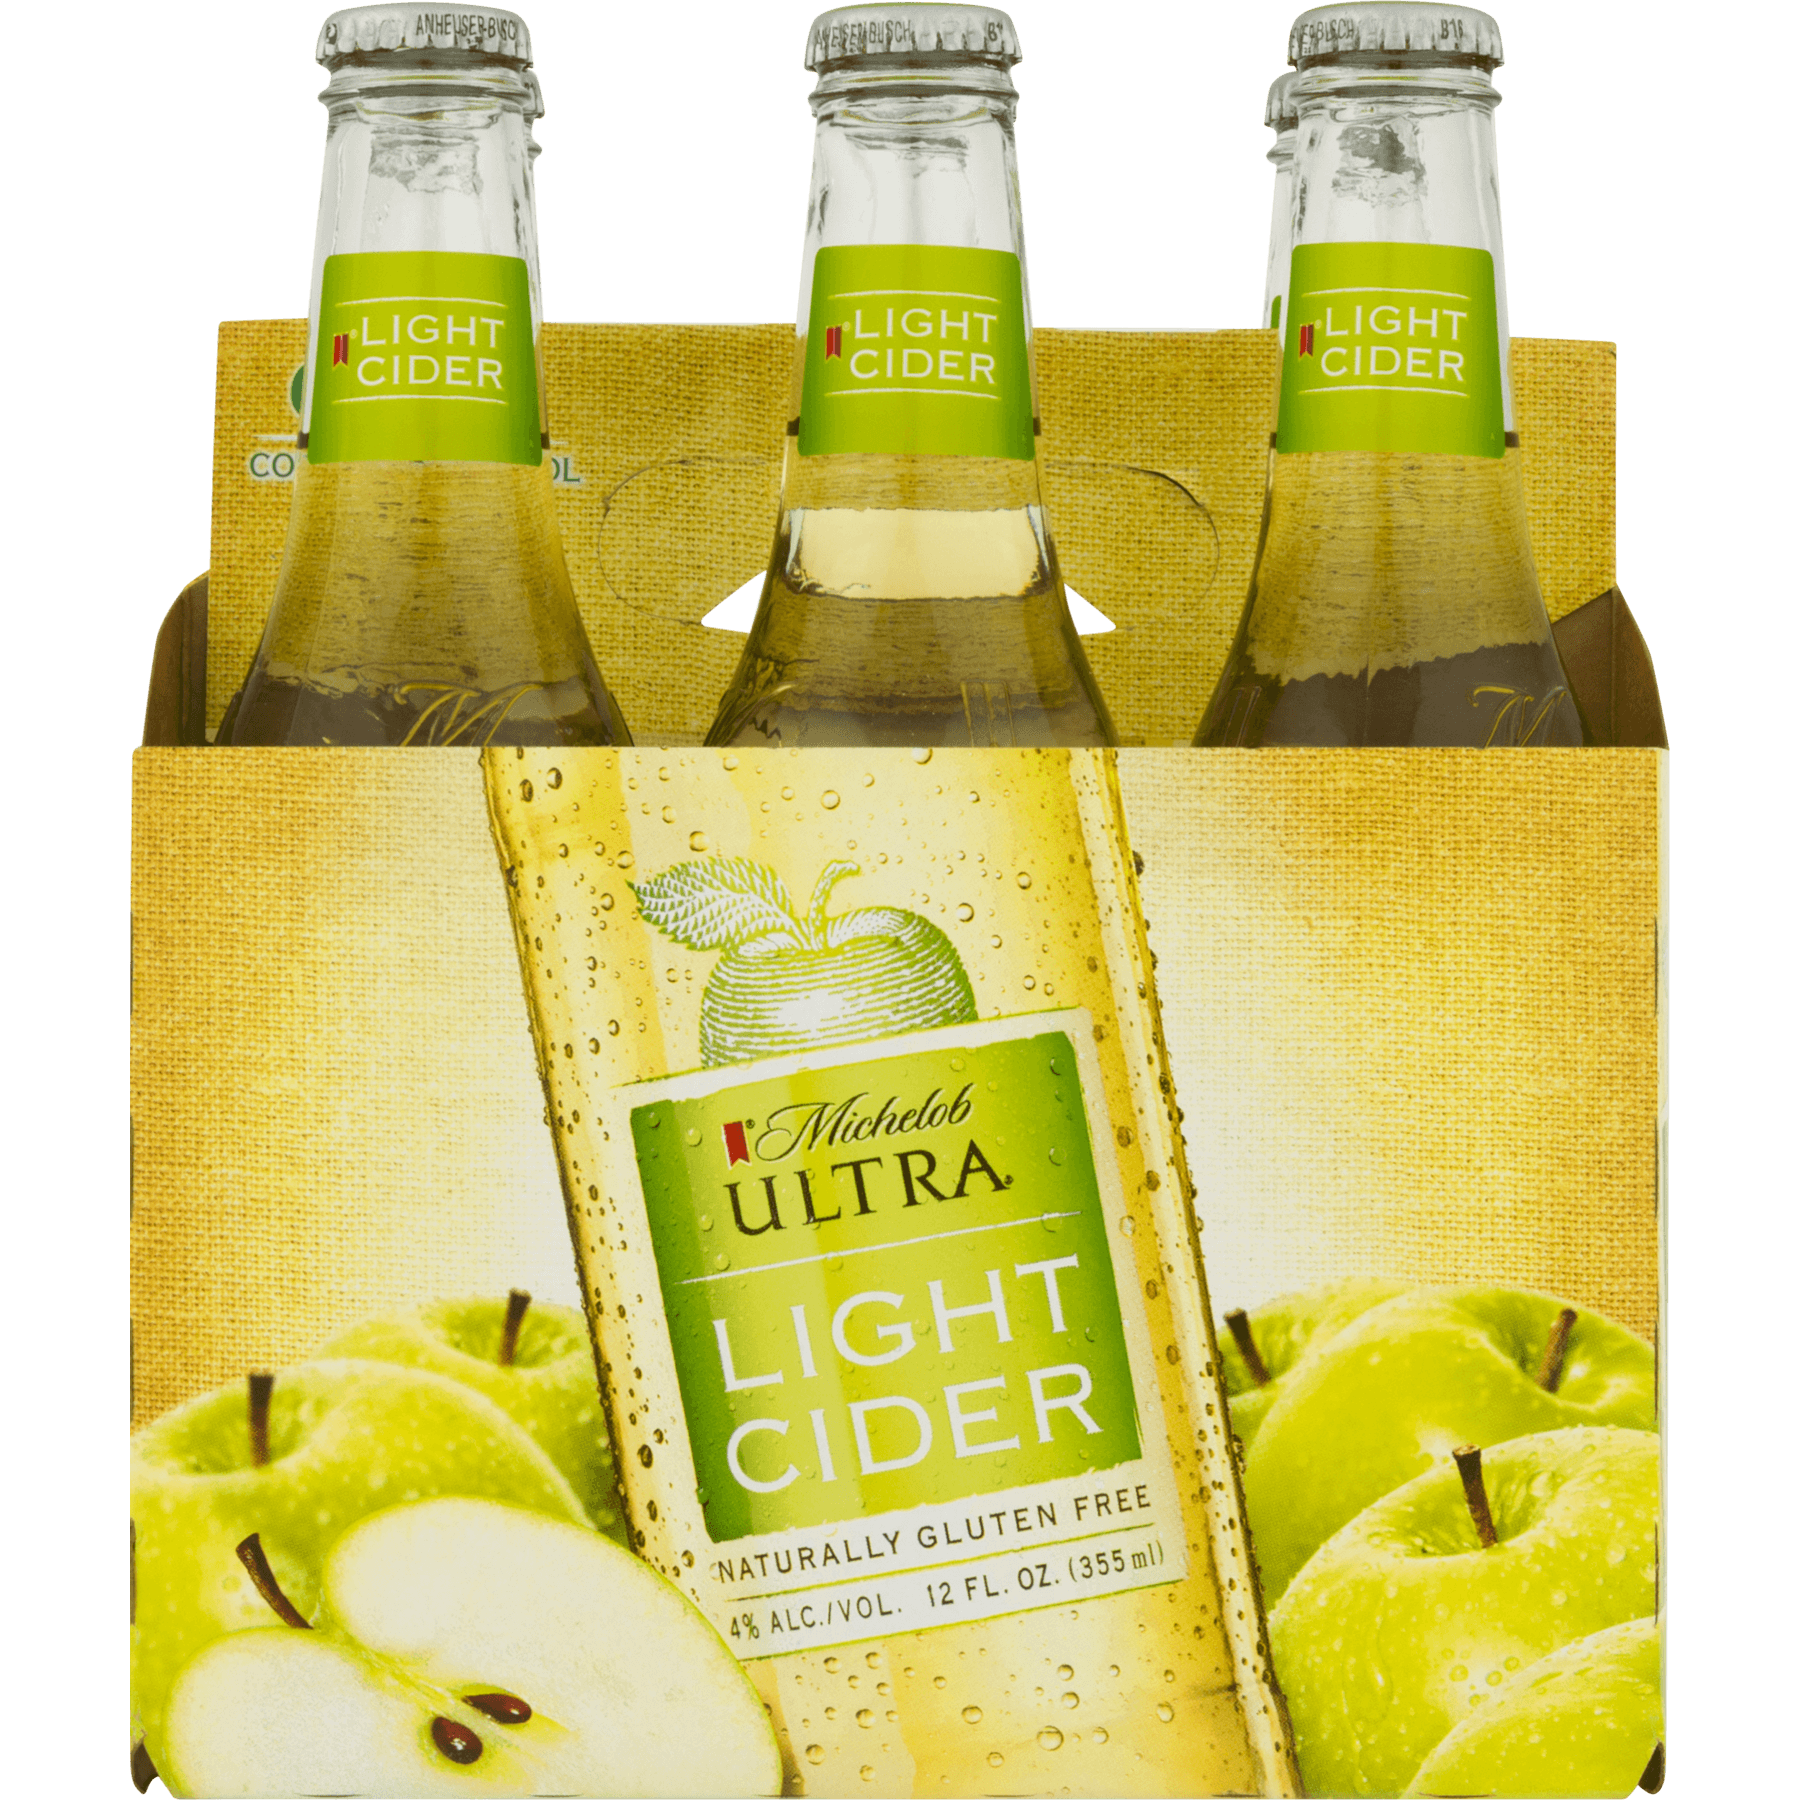 Michelob Ultra Light Cider Nutrition Label